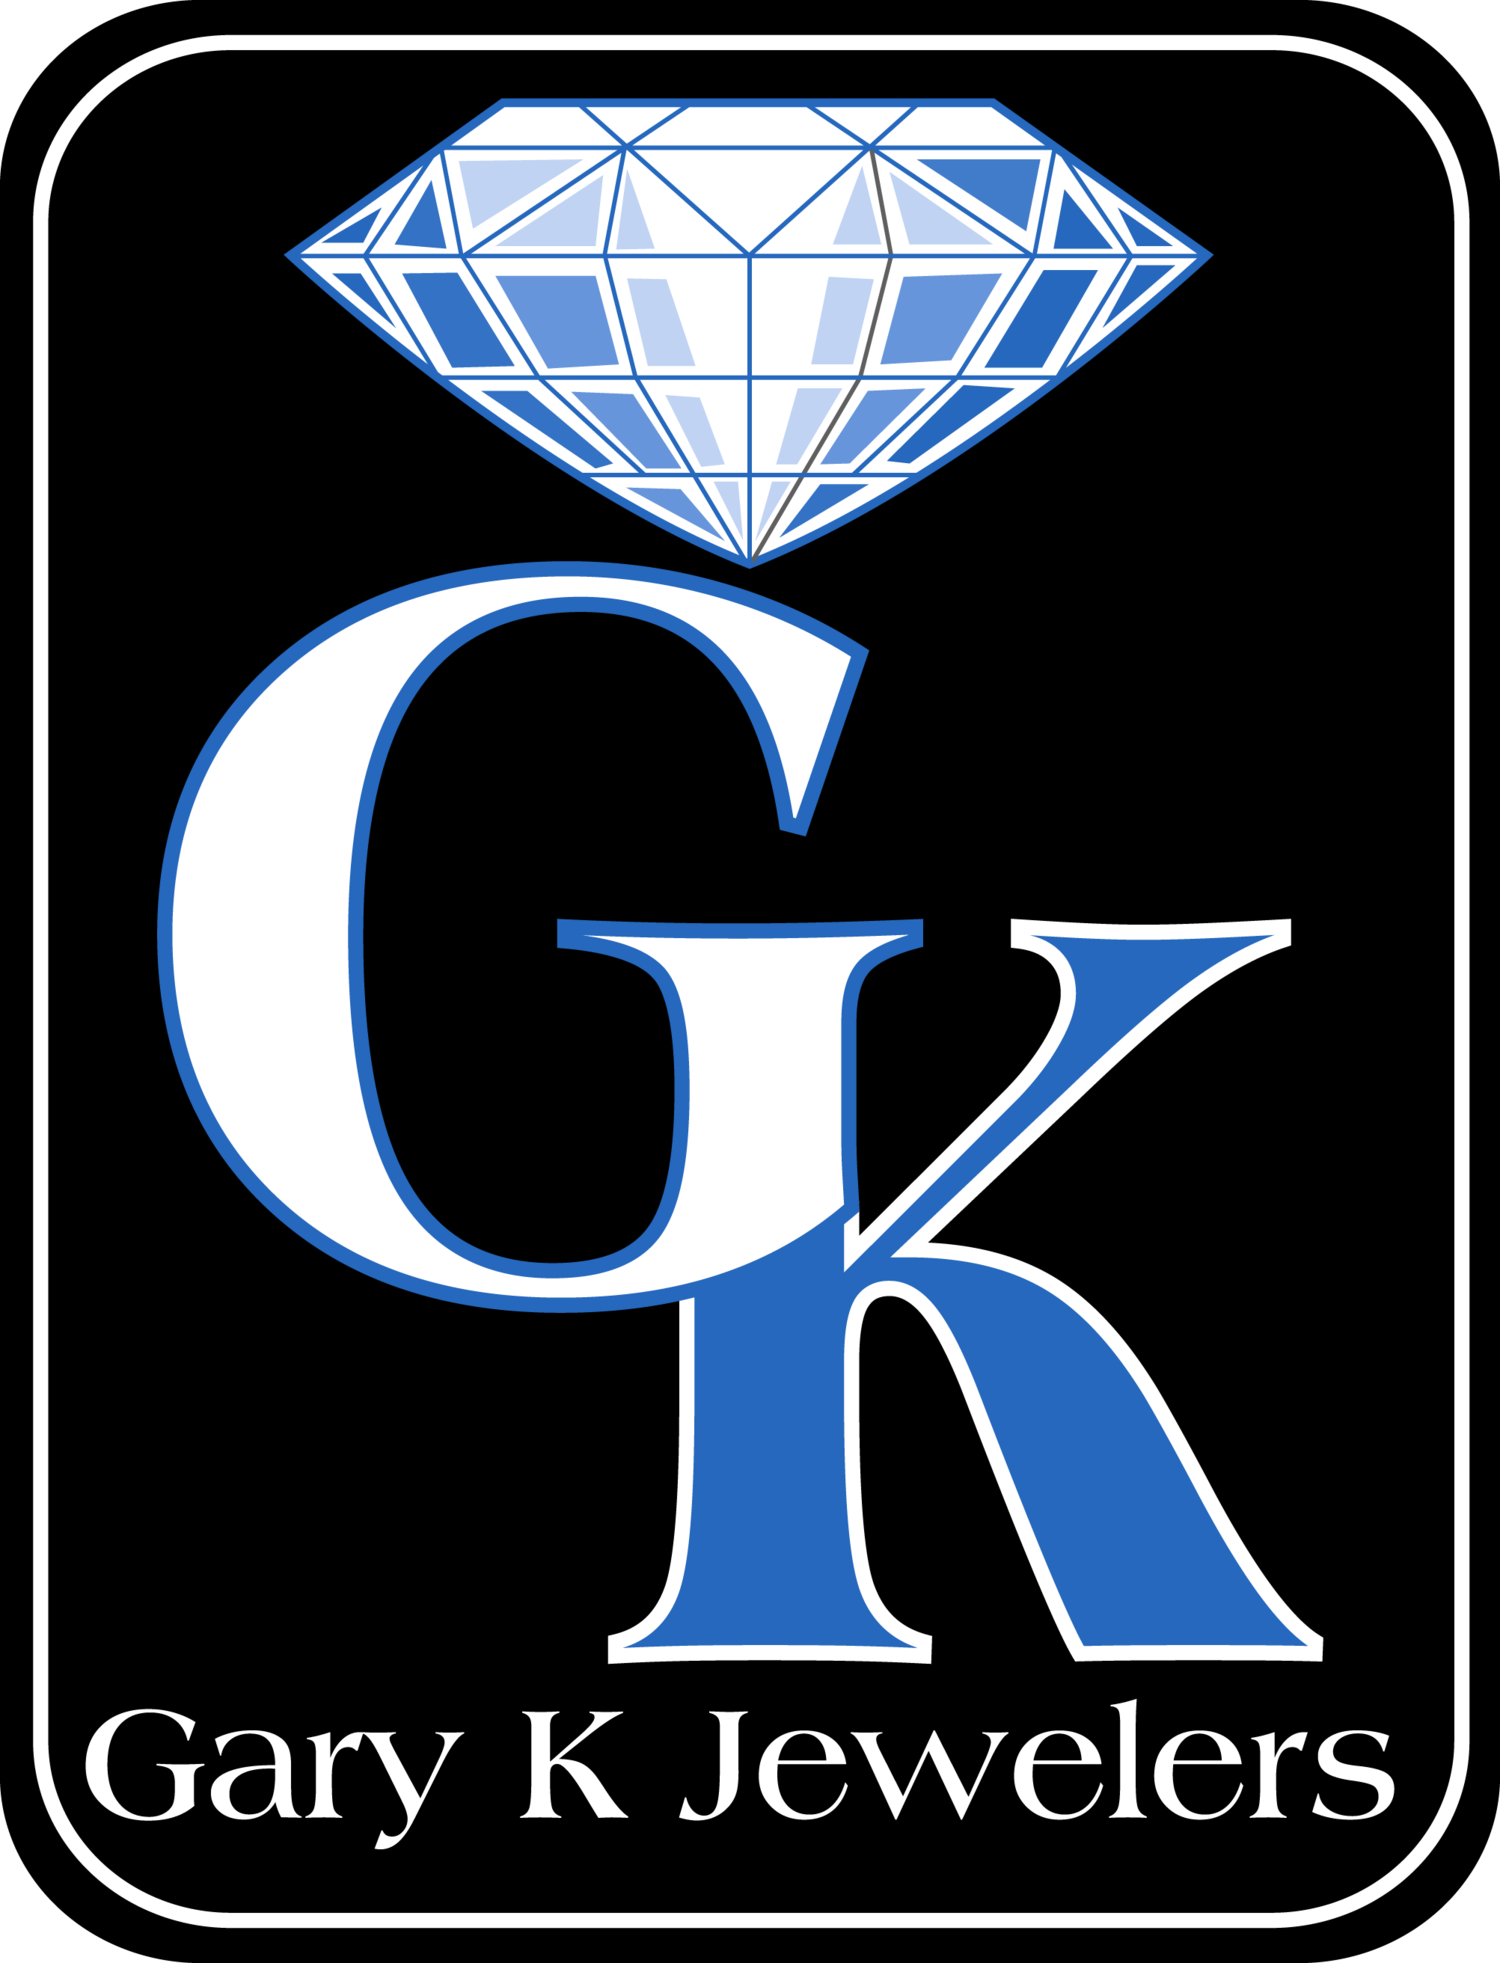 Gary K. Jewelers